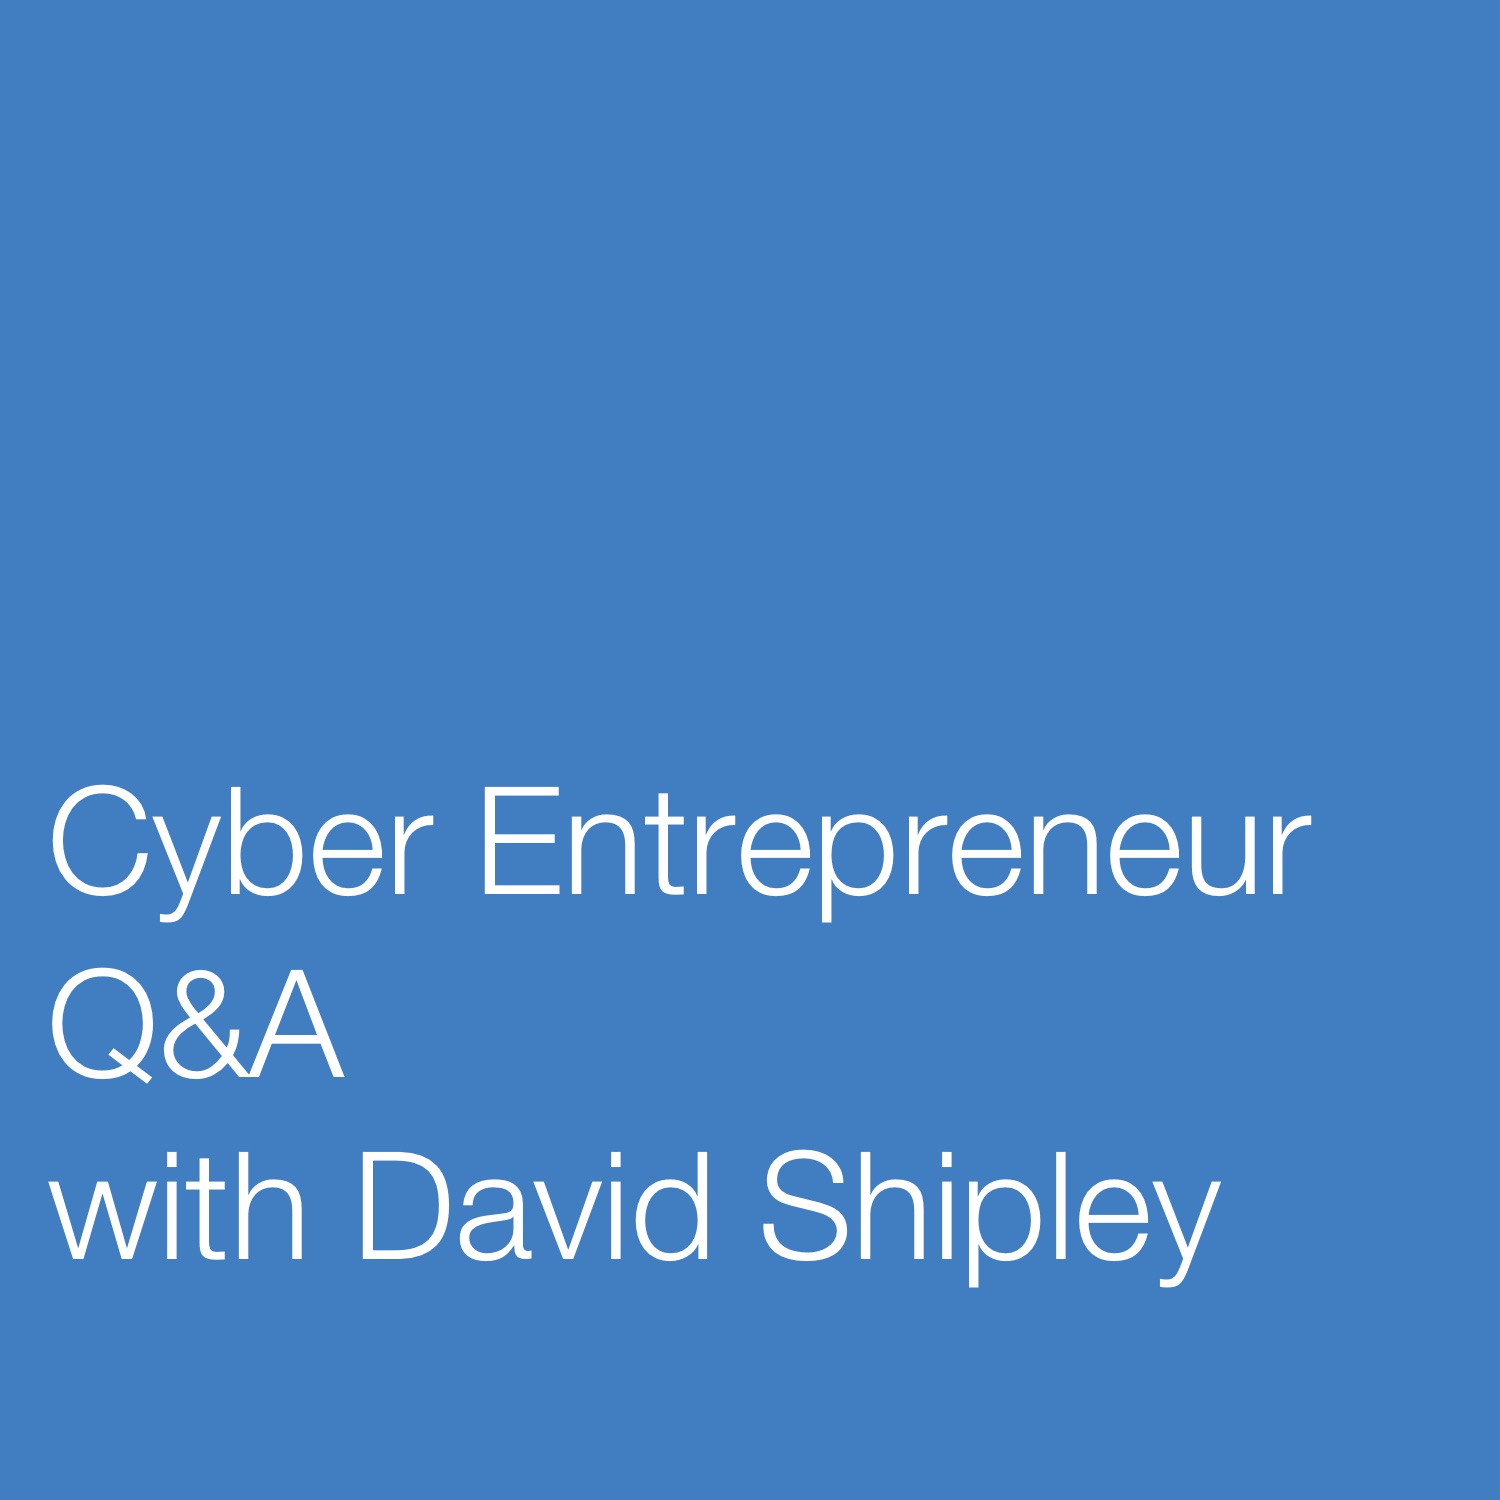 Cyber entrepreneur Q&A with David Shipley